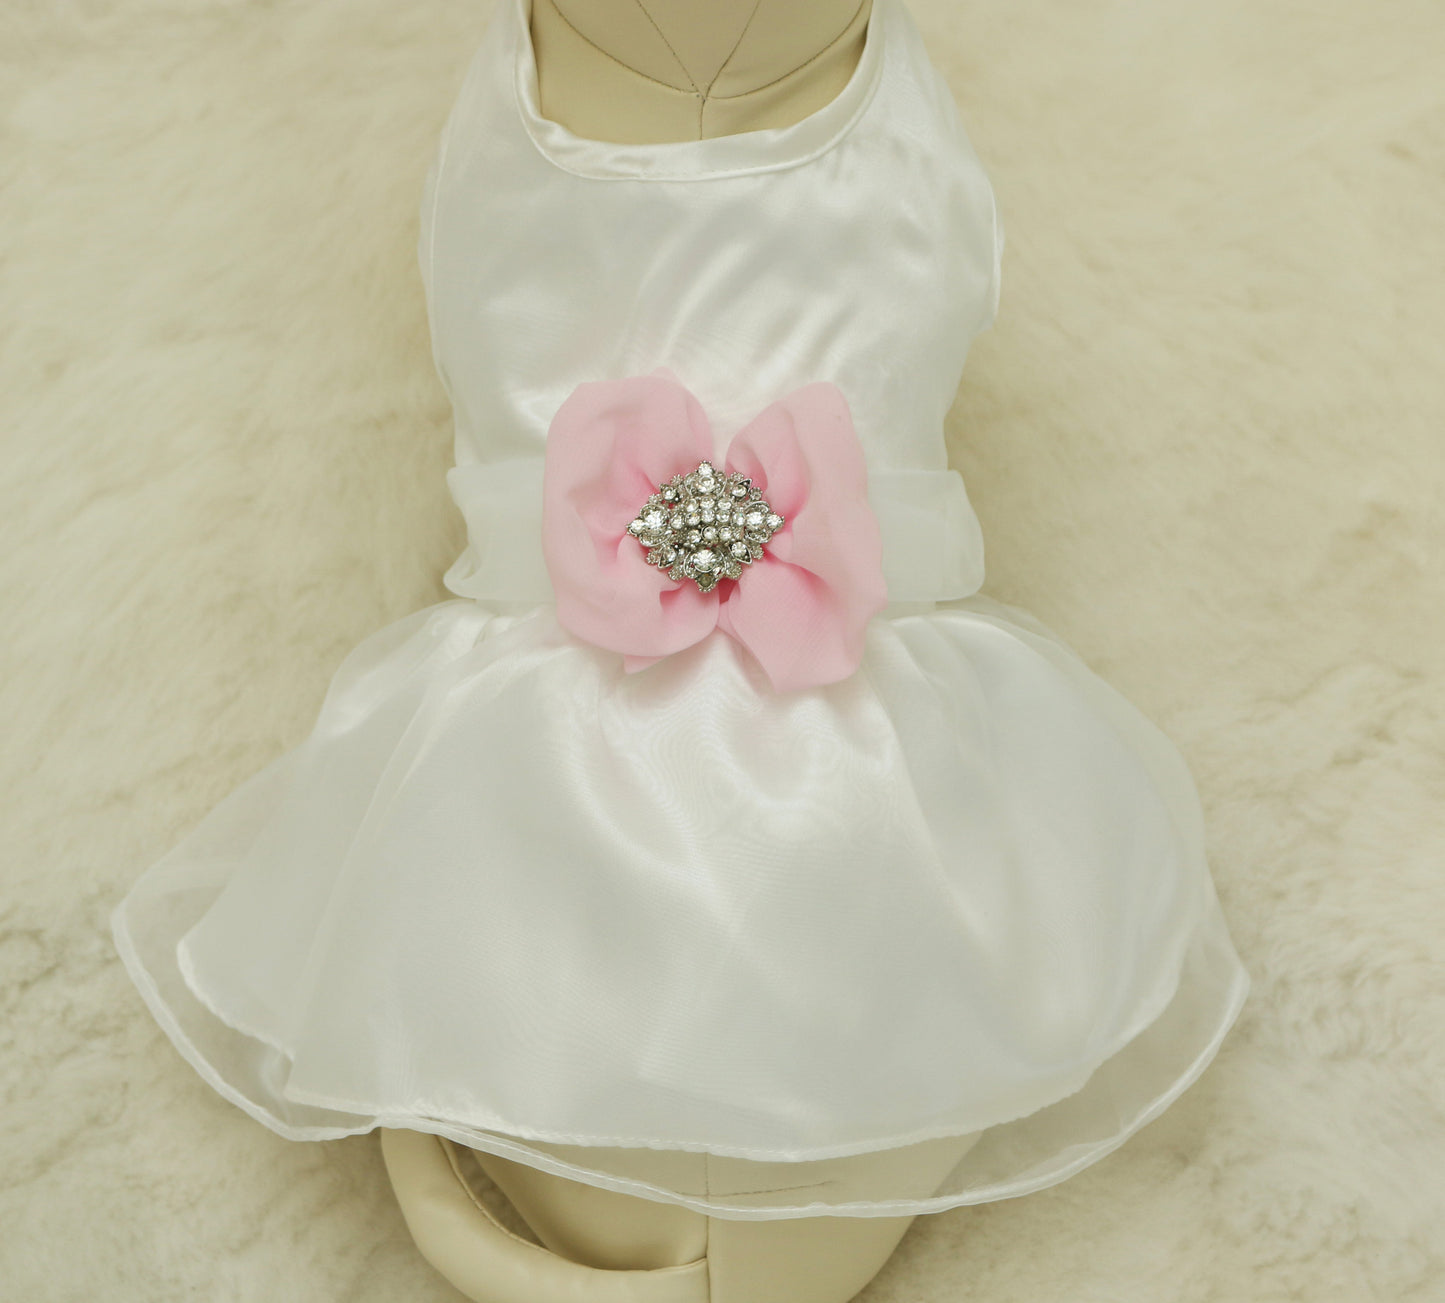 Pink Dog Dress,  Pet wedding accessory,dog clothing , Wedding dog collar